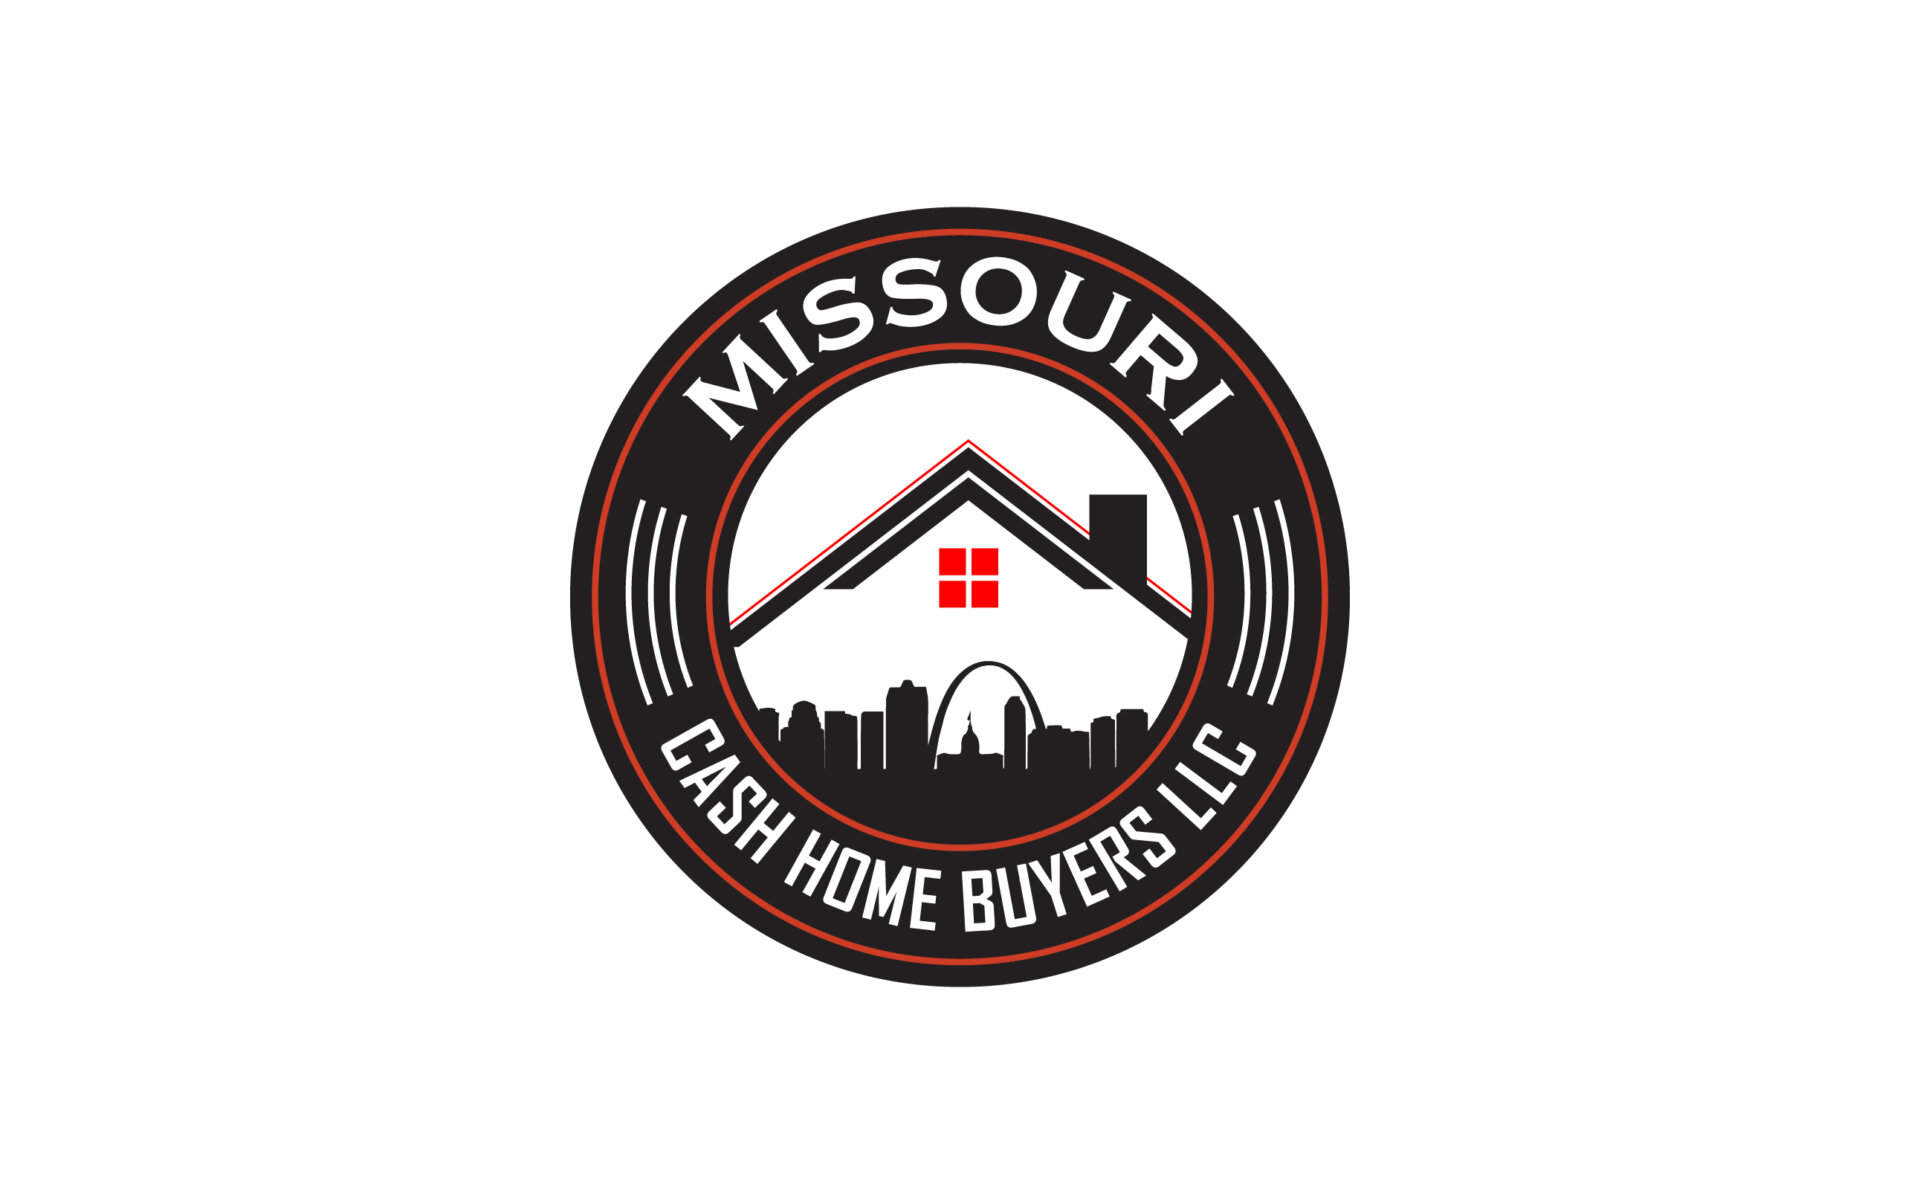 Missouri Cash Home Buyers logo